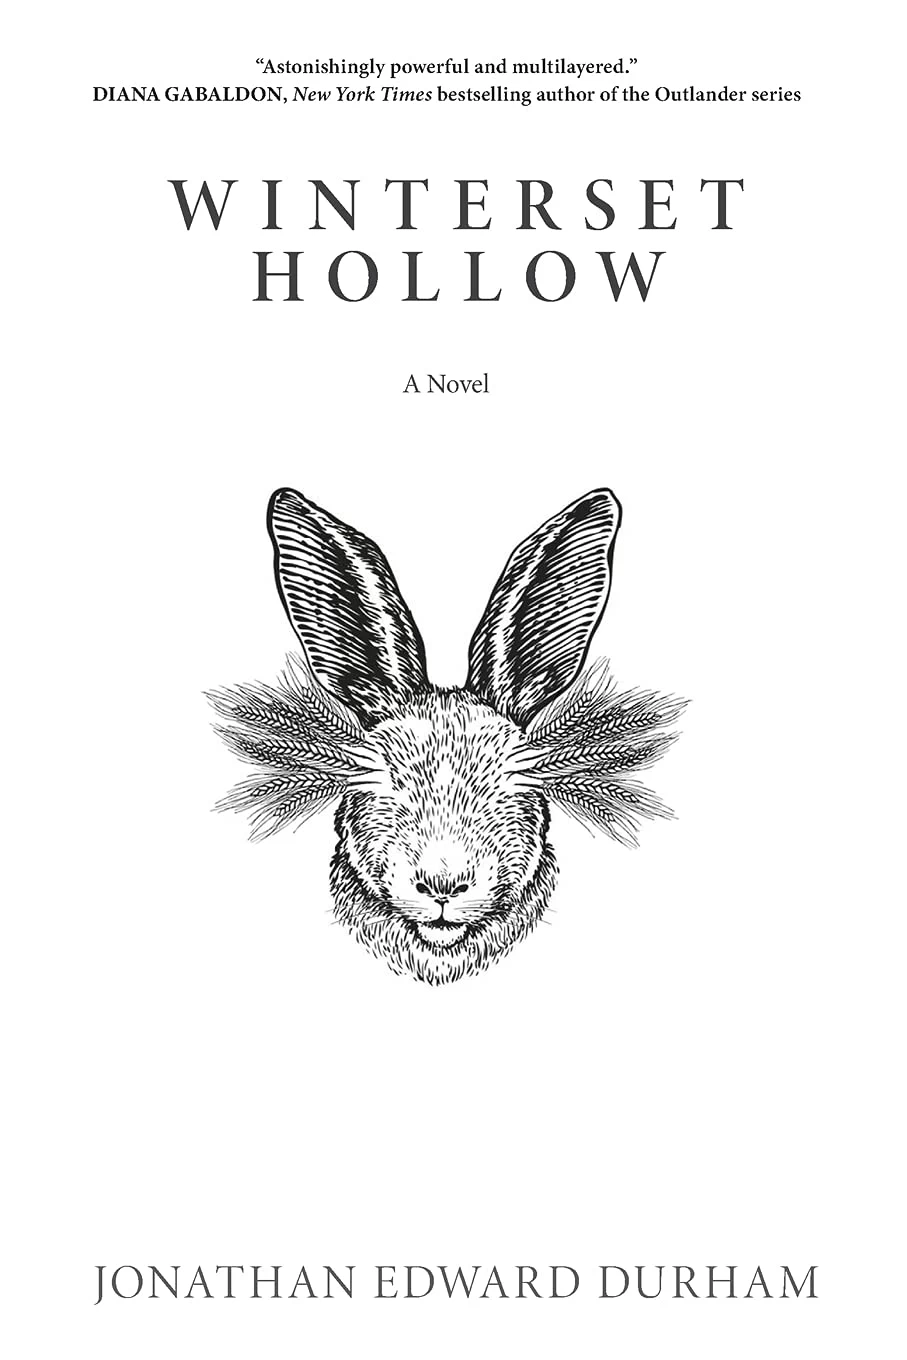 Winterset Hollow by Jonathan Edward Durham